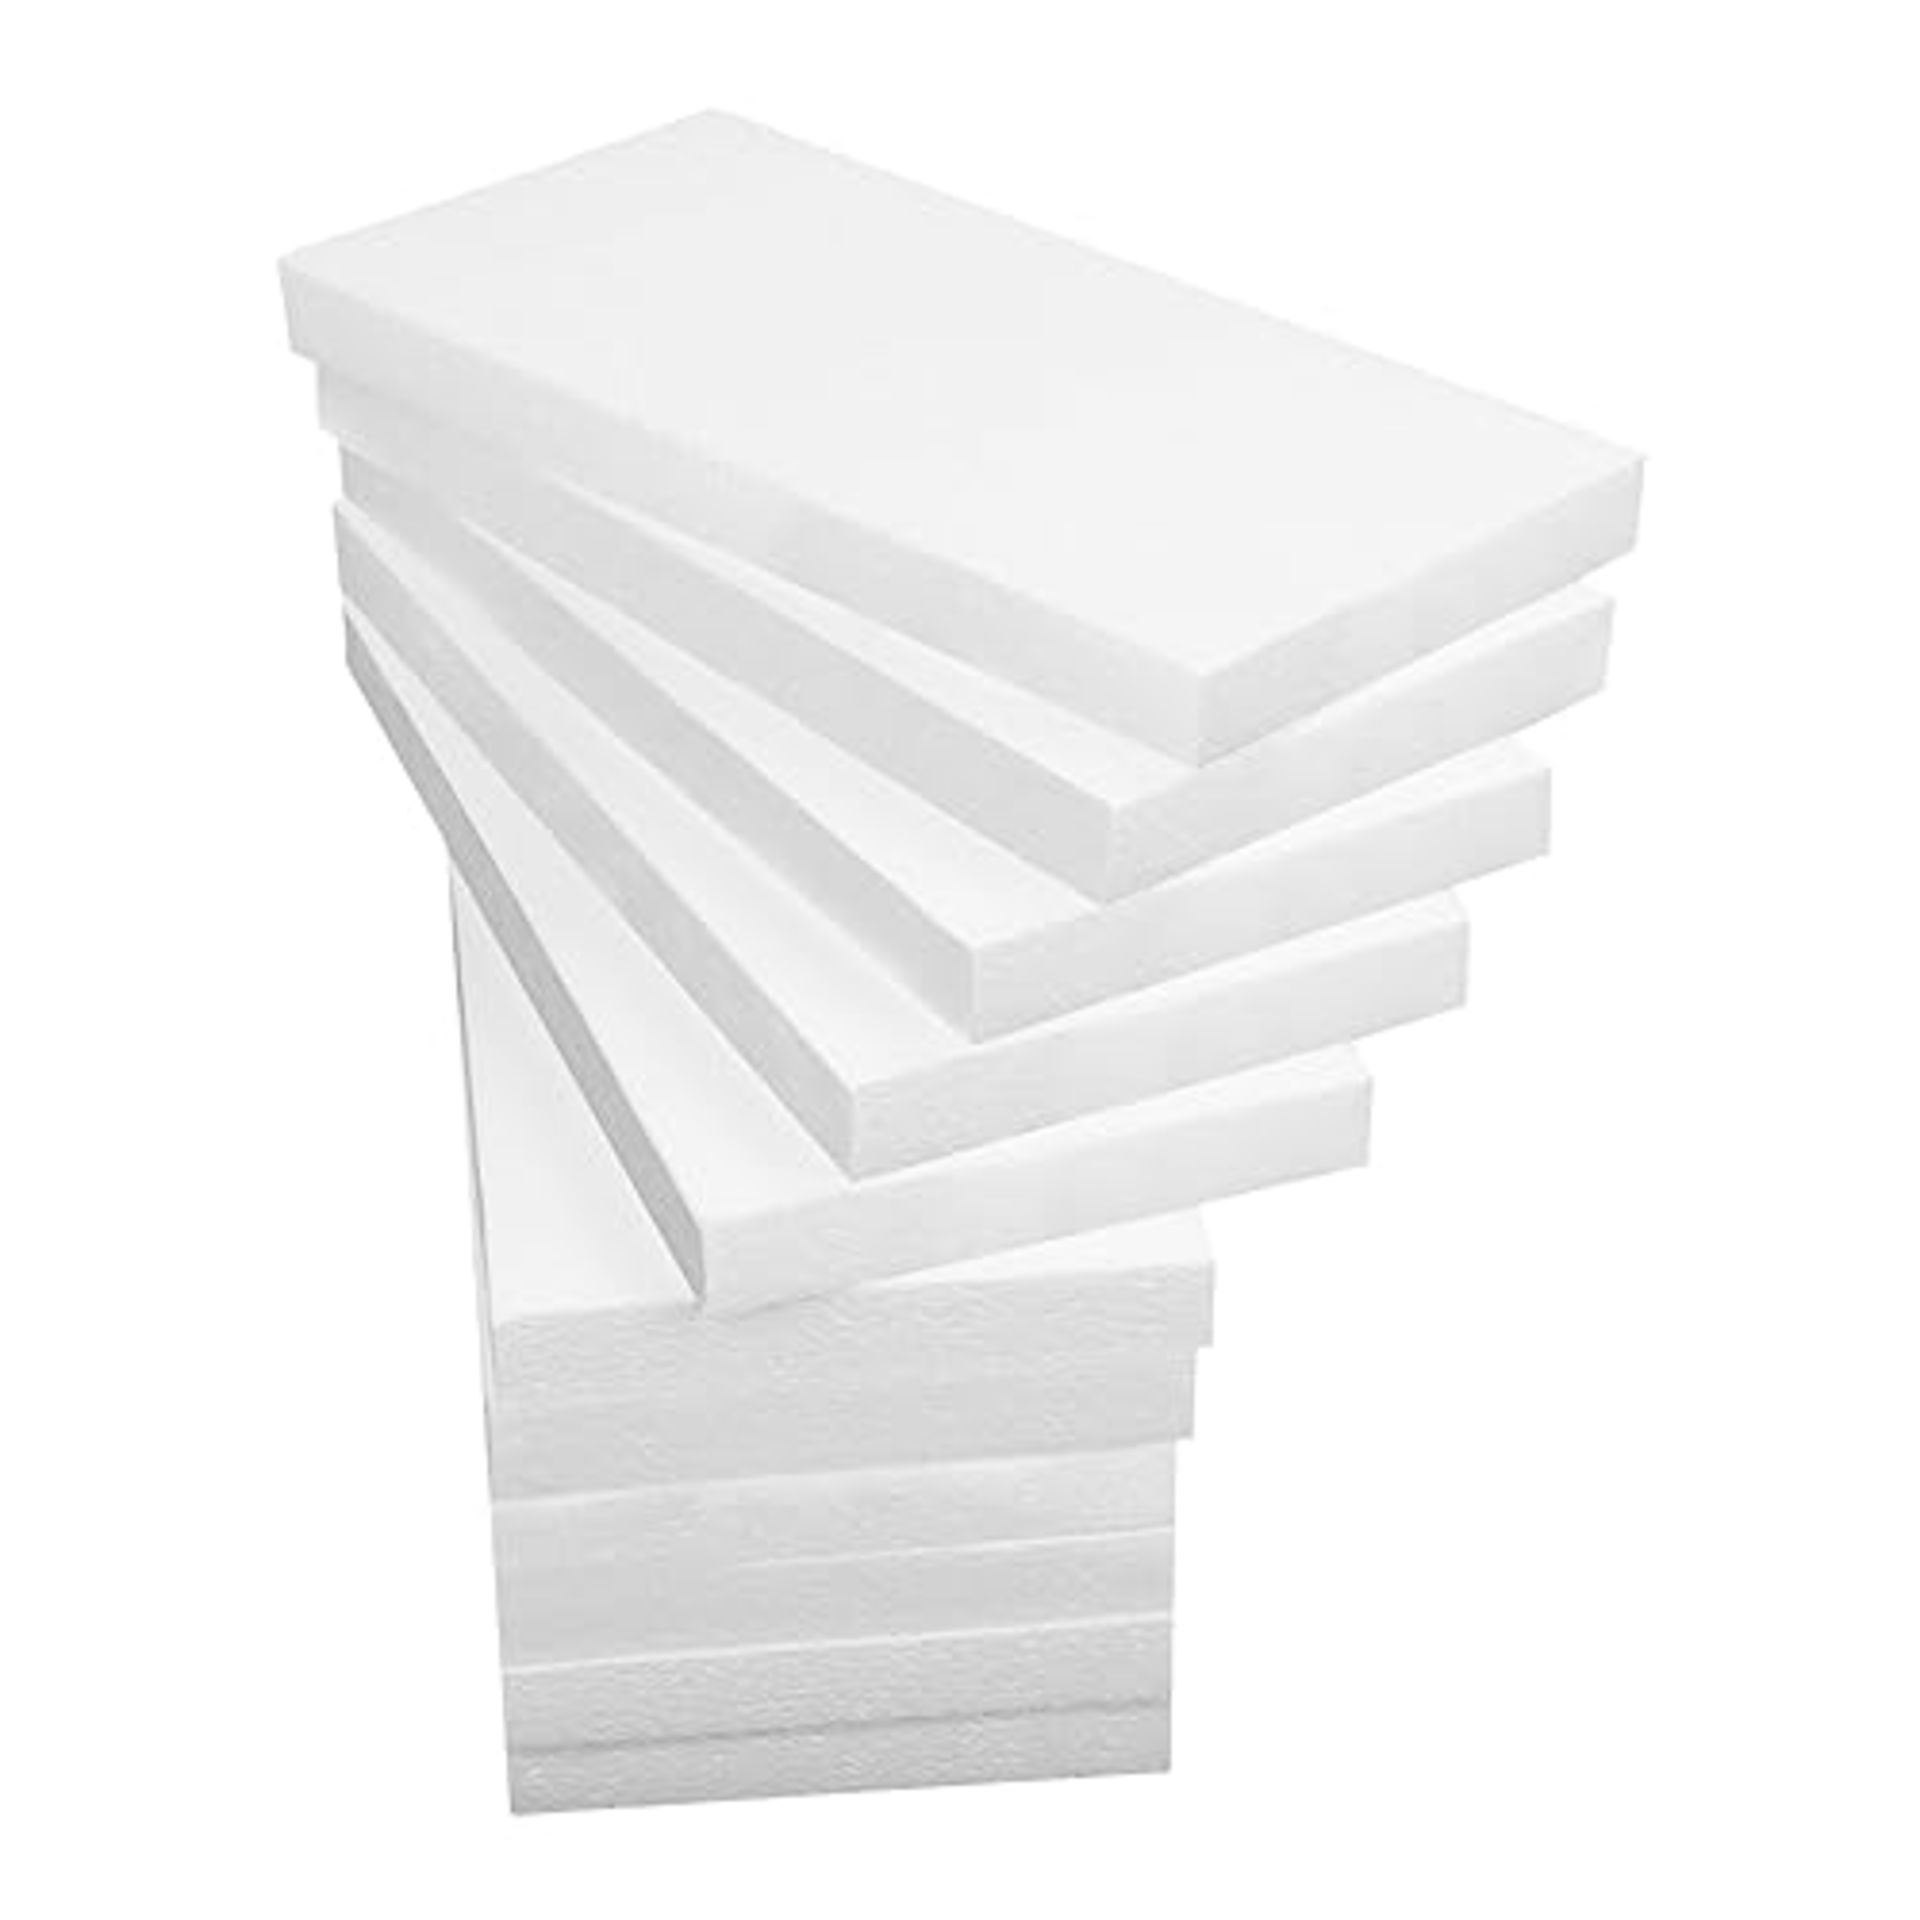 Aselected 15Pcs Styrofoam Blocks For Porject 30 X 15 X 2.5Cm Polystyrene Craft Foam Blocks For Scul